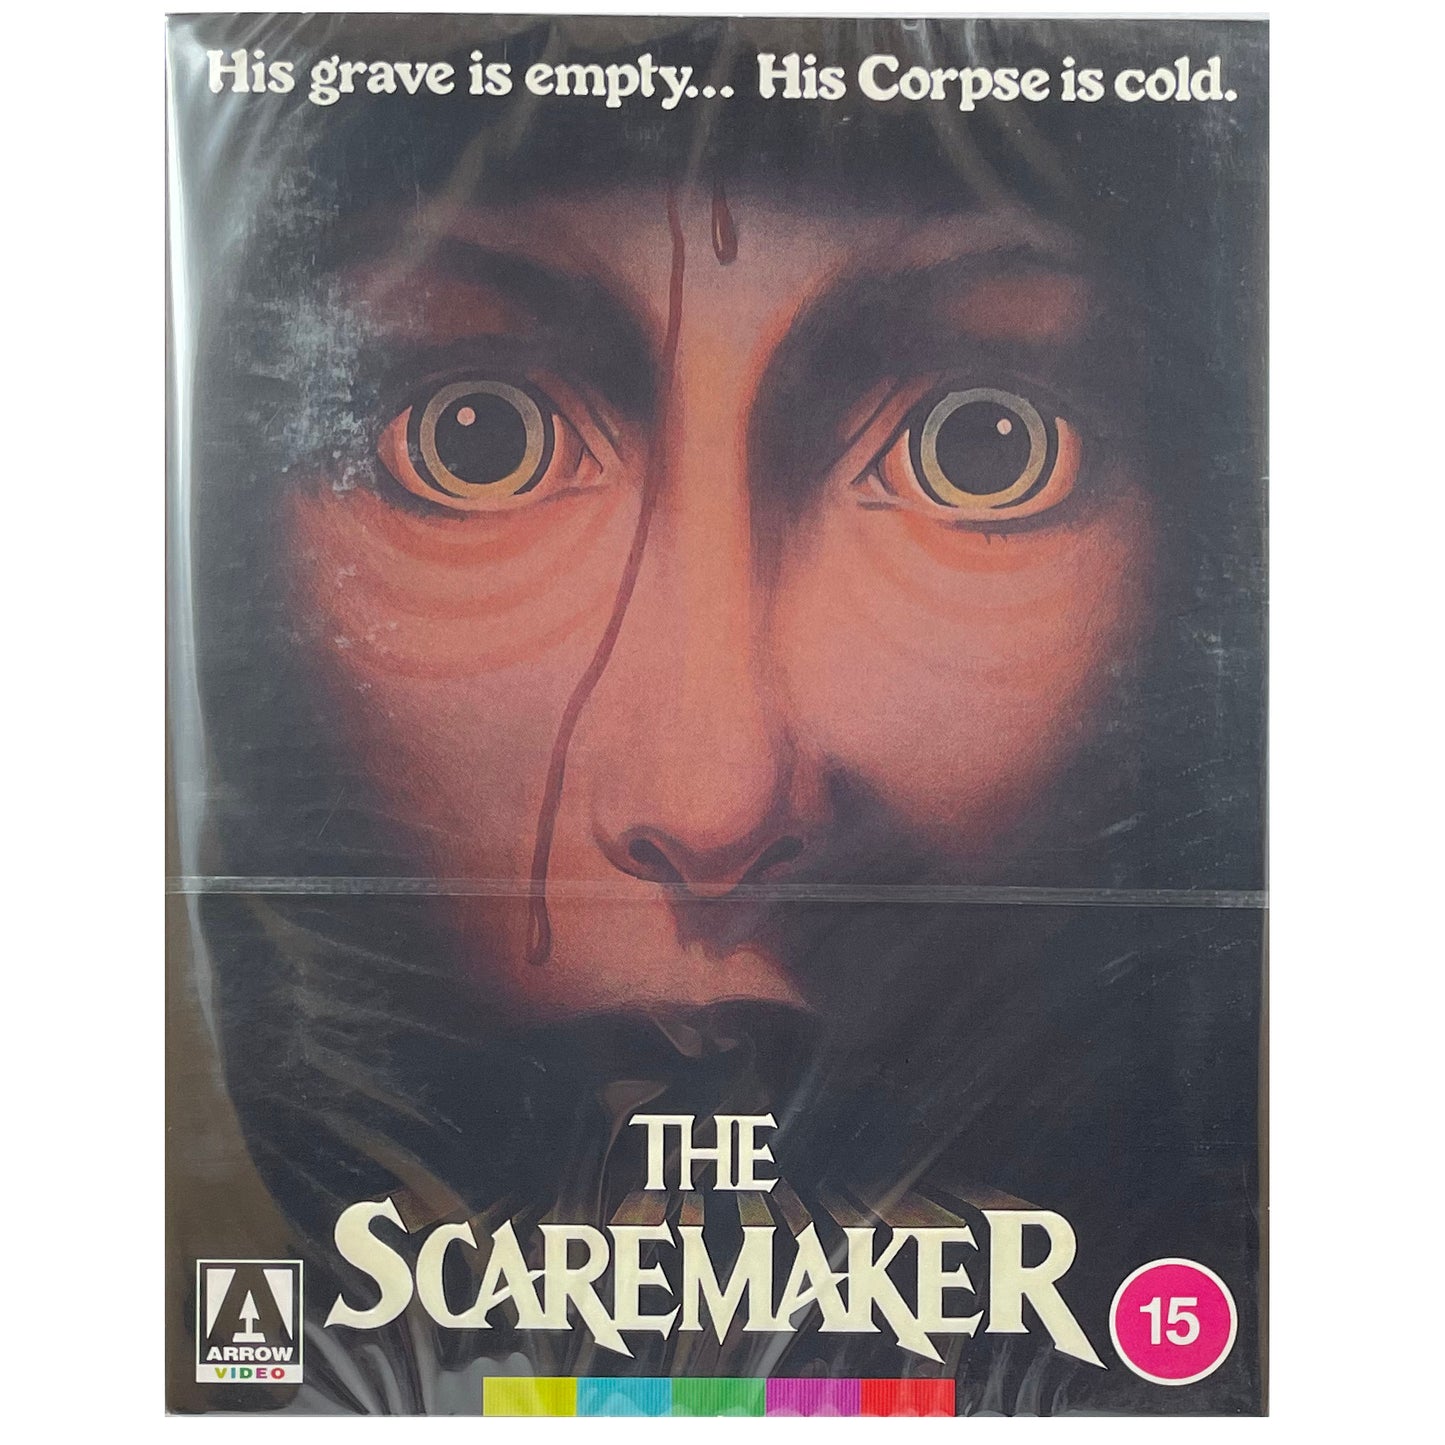 The Scaremaker Blu-Ray